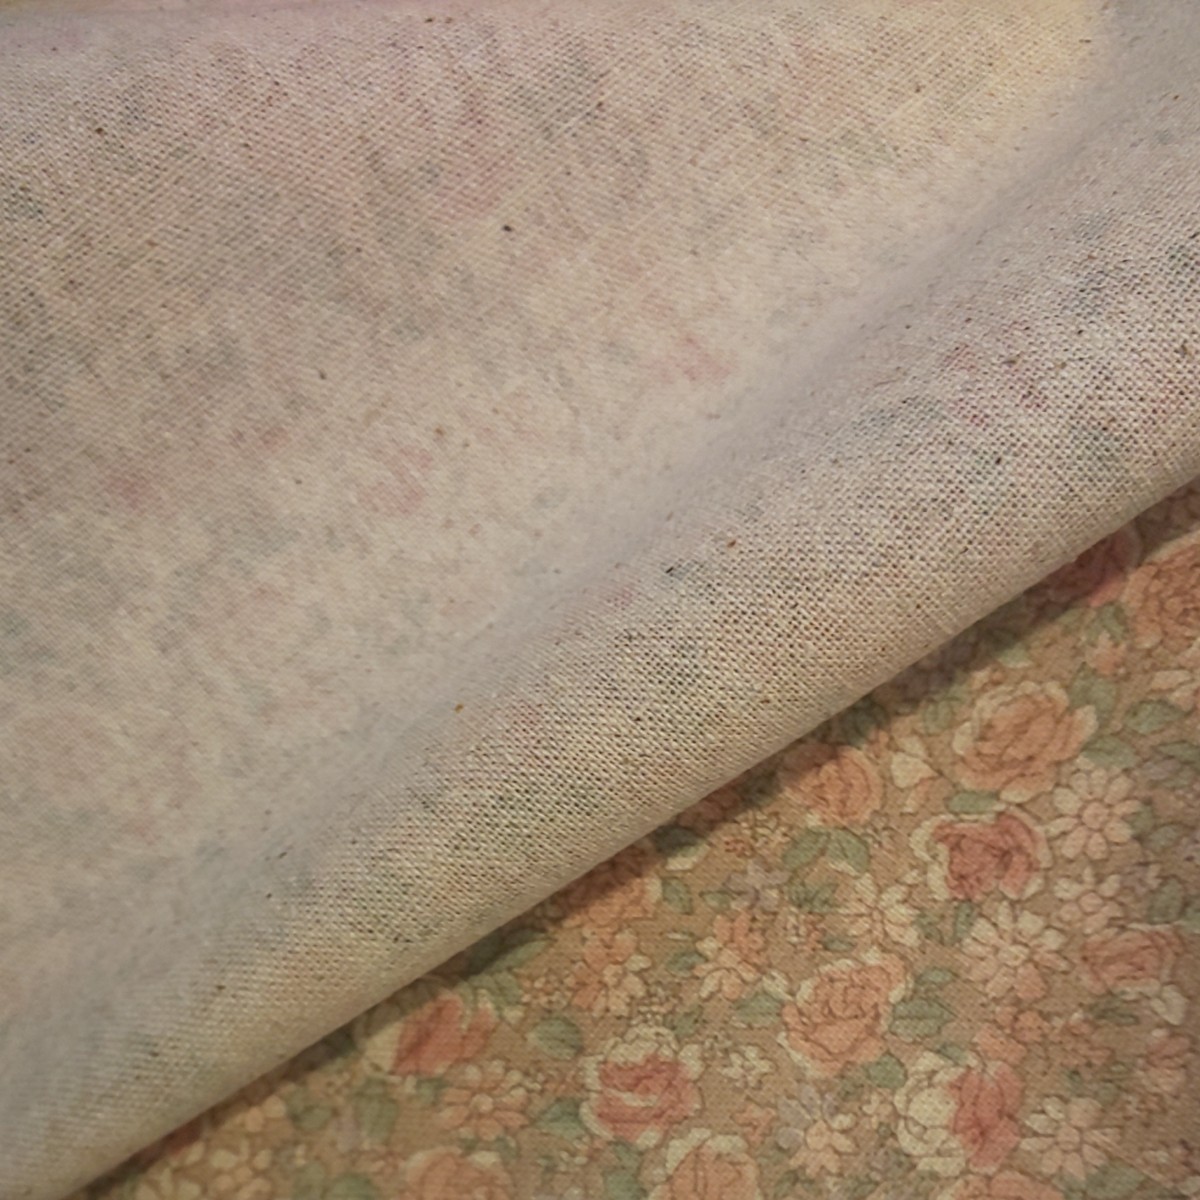 YUWA コットンリネンキャンバス生地 綿麻キャンバス生地 花柄 ピンク系 生地巾約108cm×約50cm